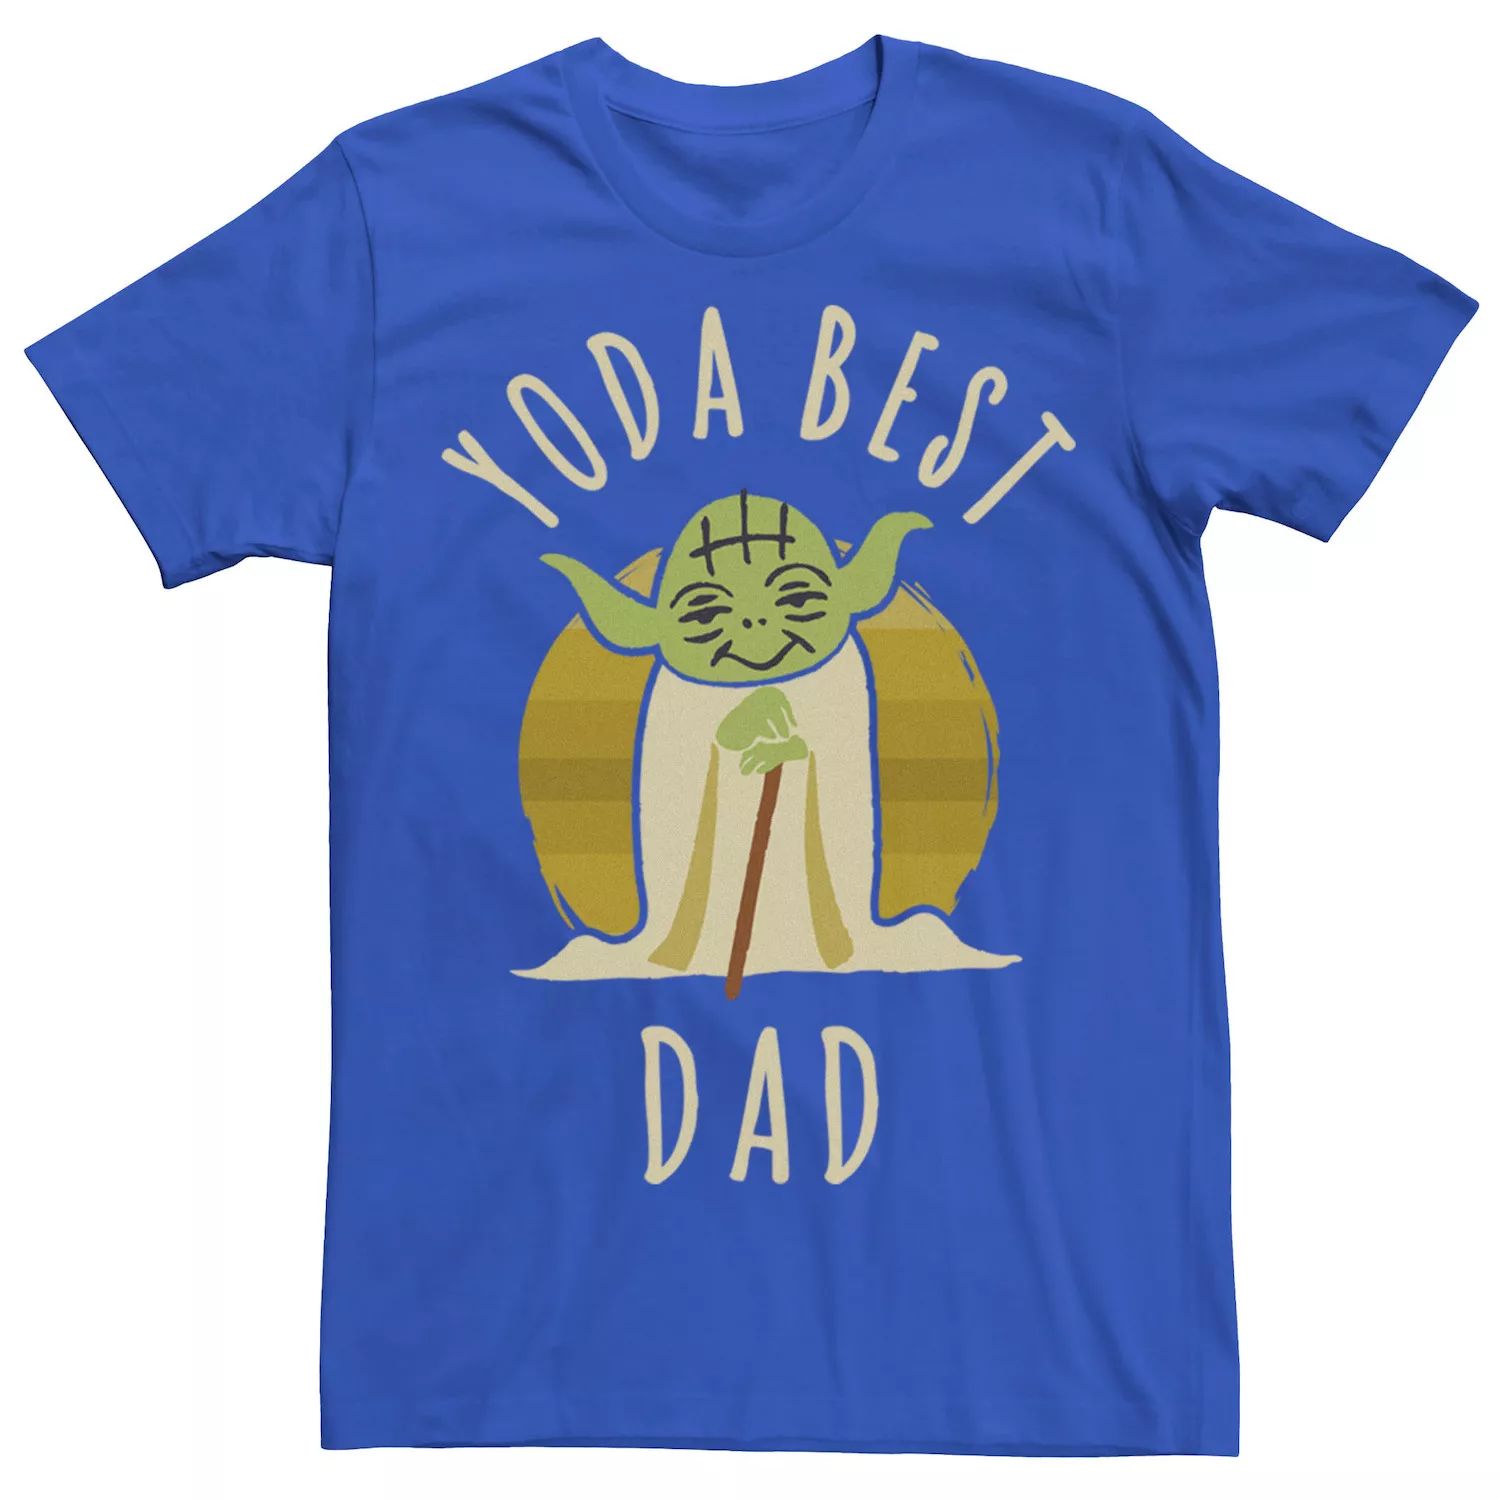 Мужская футболка Yoda Best Dad с рисунком Йоды Star Wars